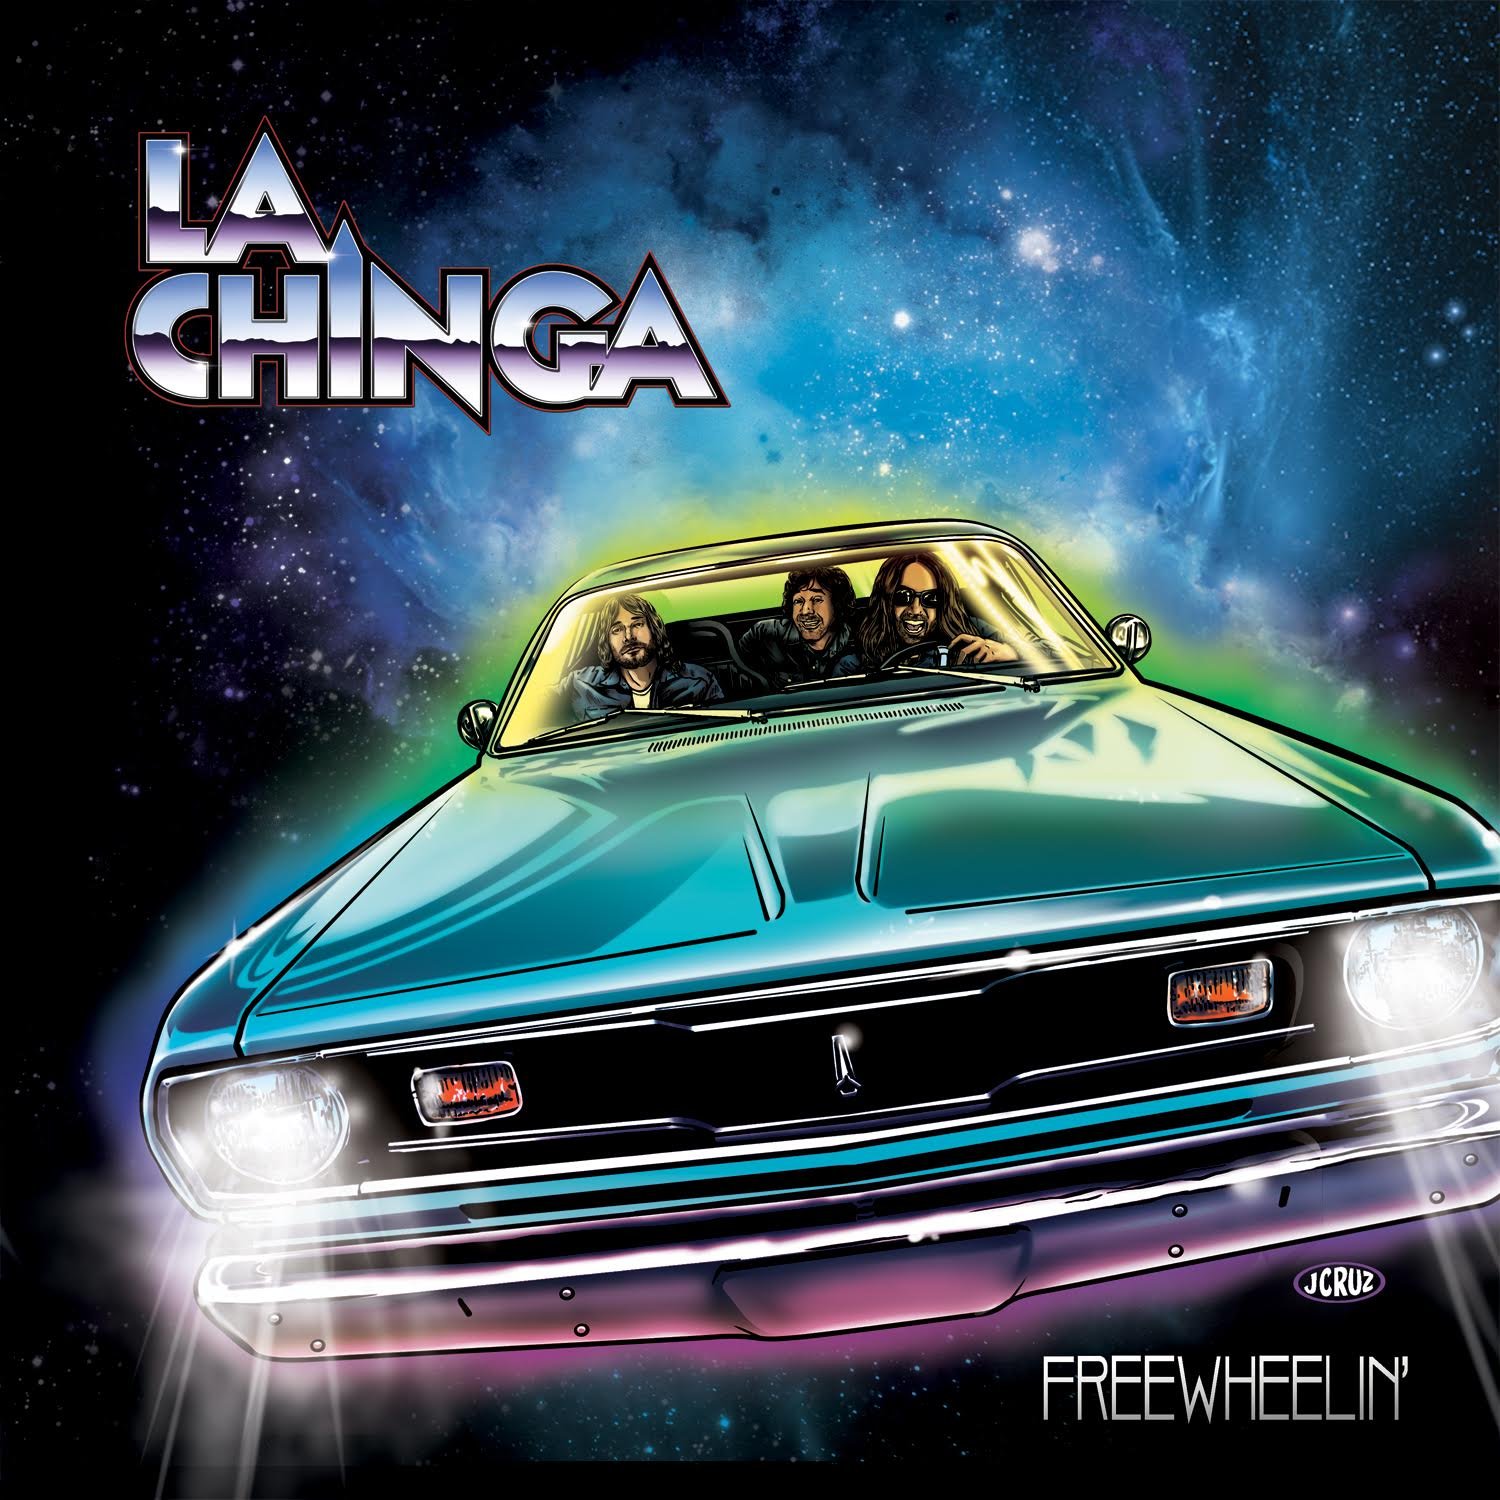 LA CHINGA - Freewheelin' cover 